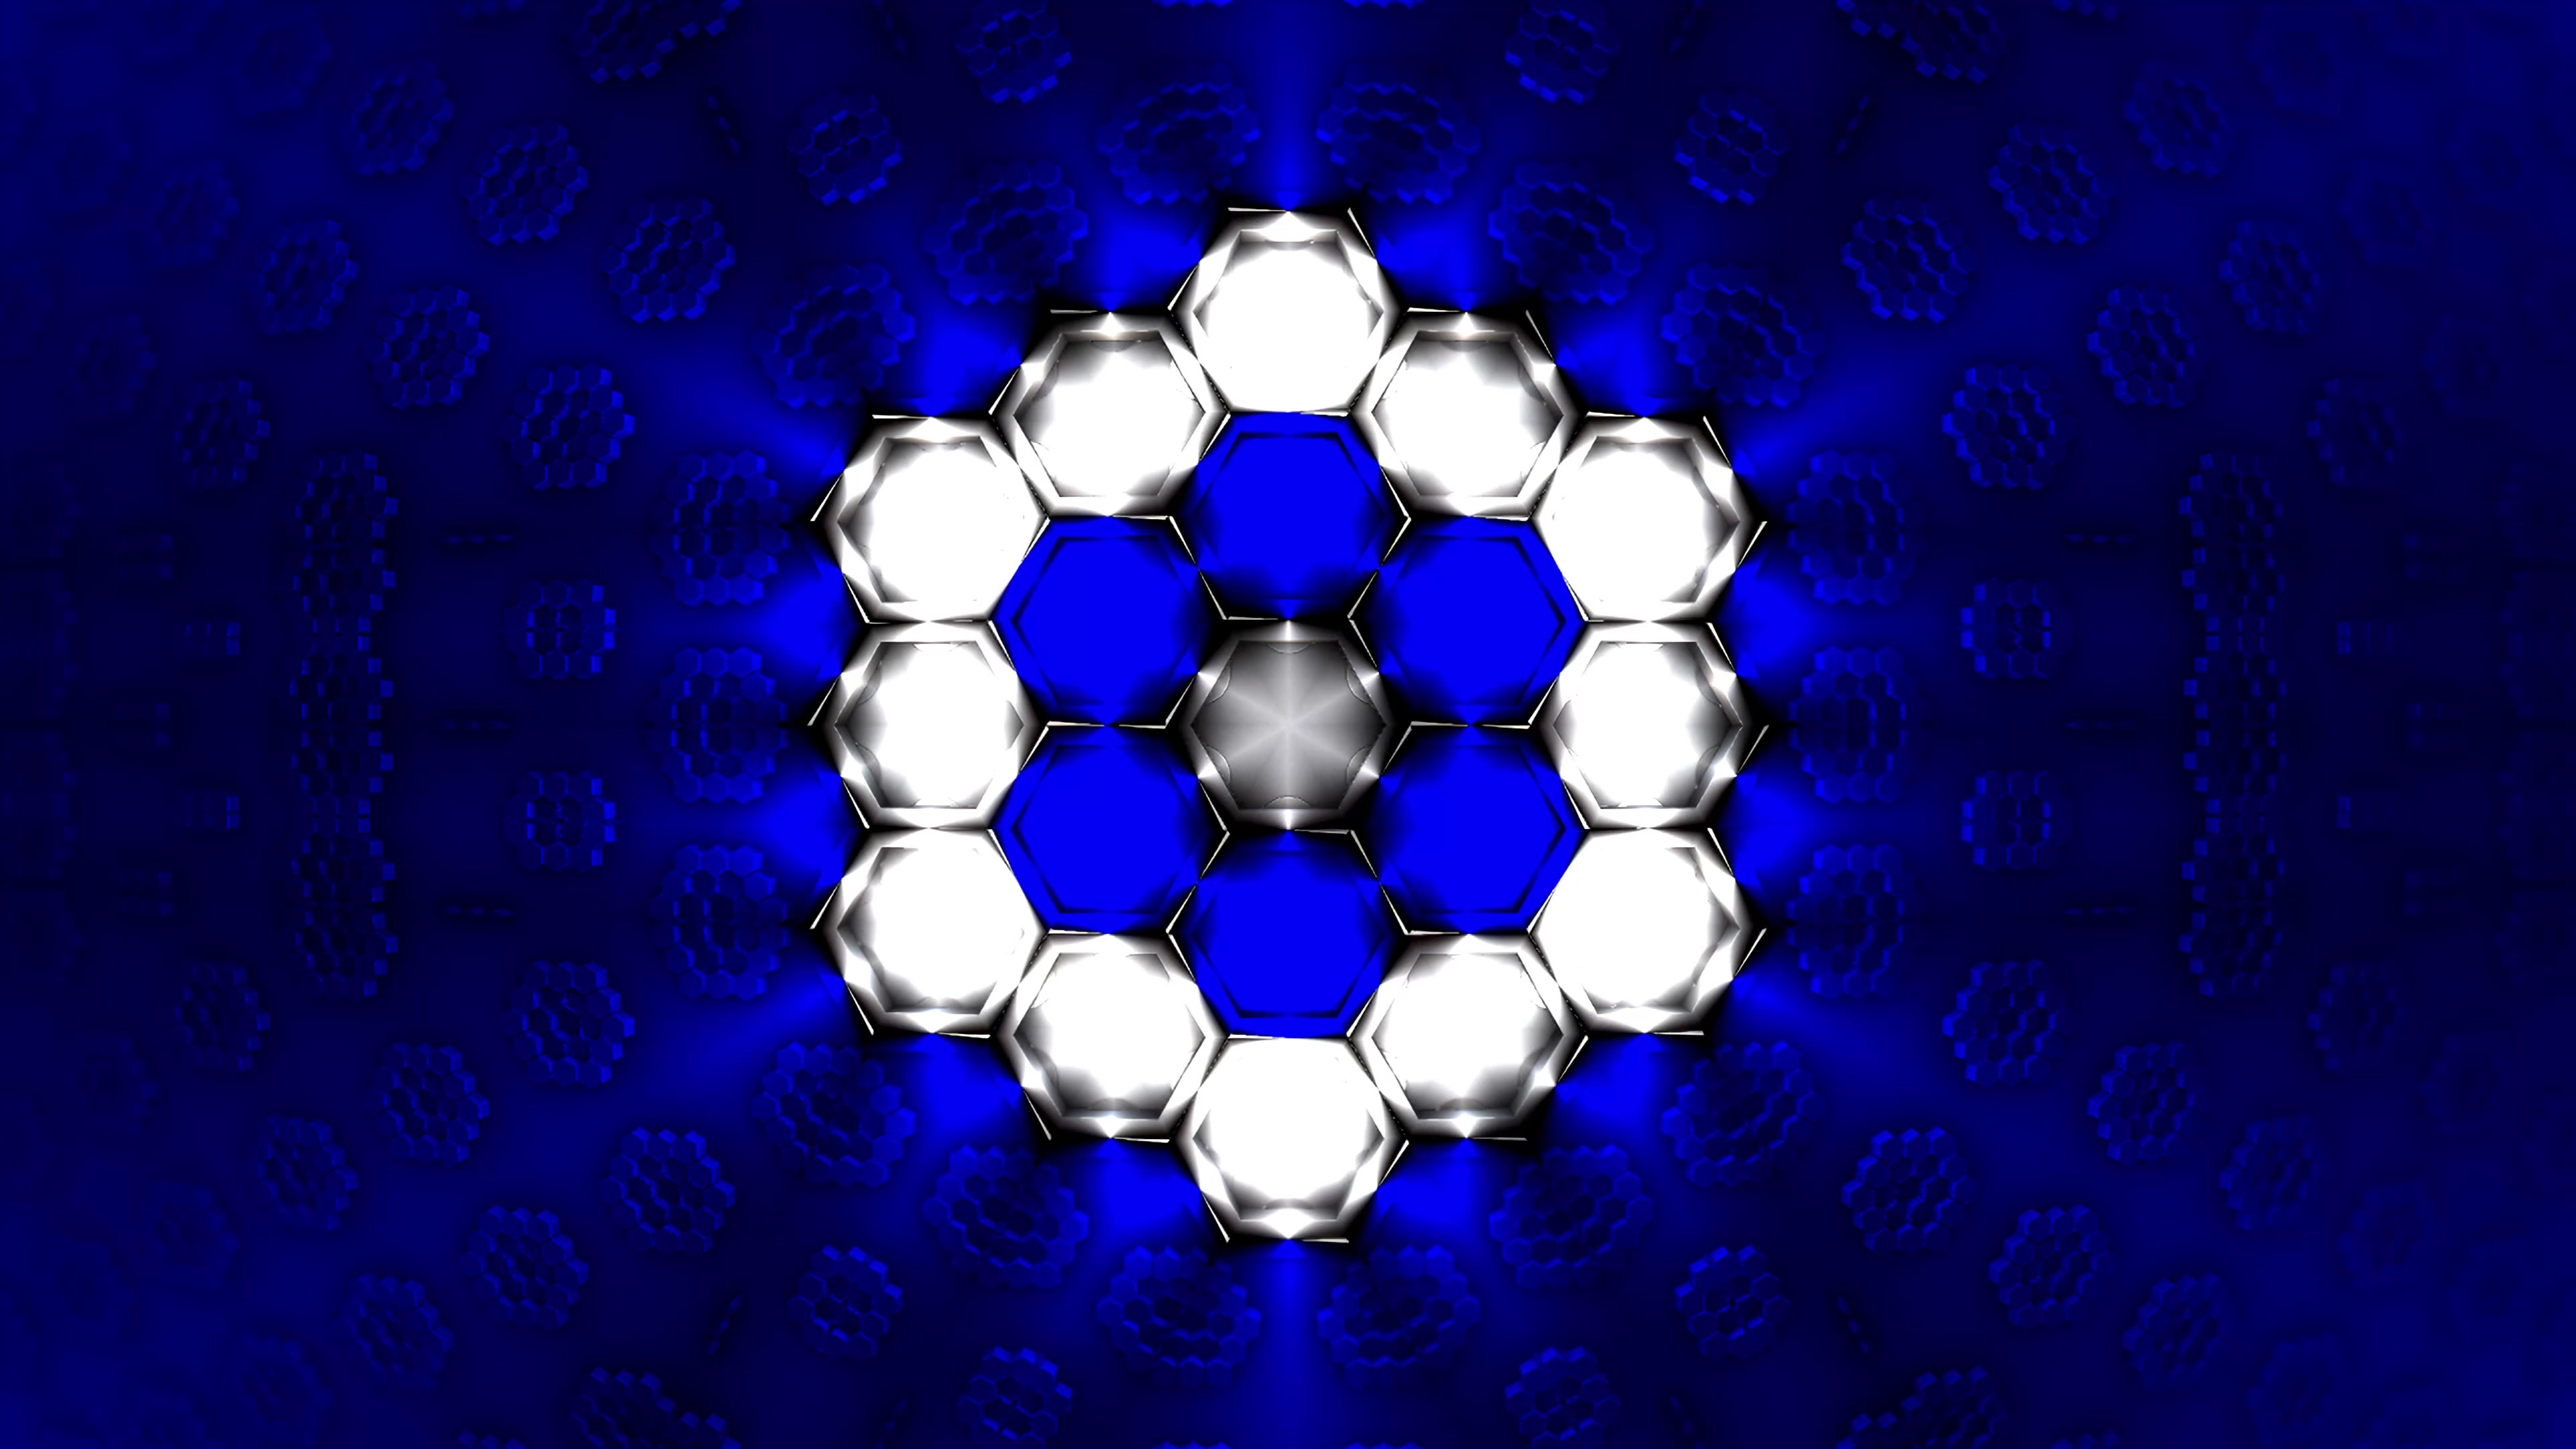 Compound Visions - Hexagon Mirror Array #16